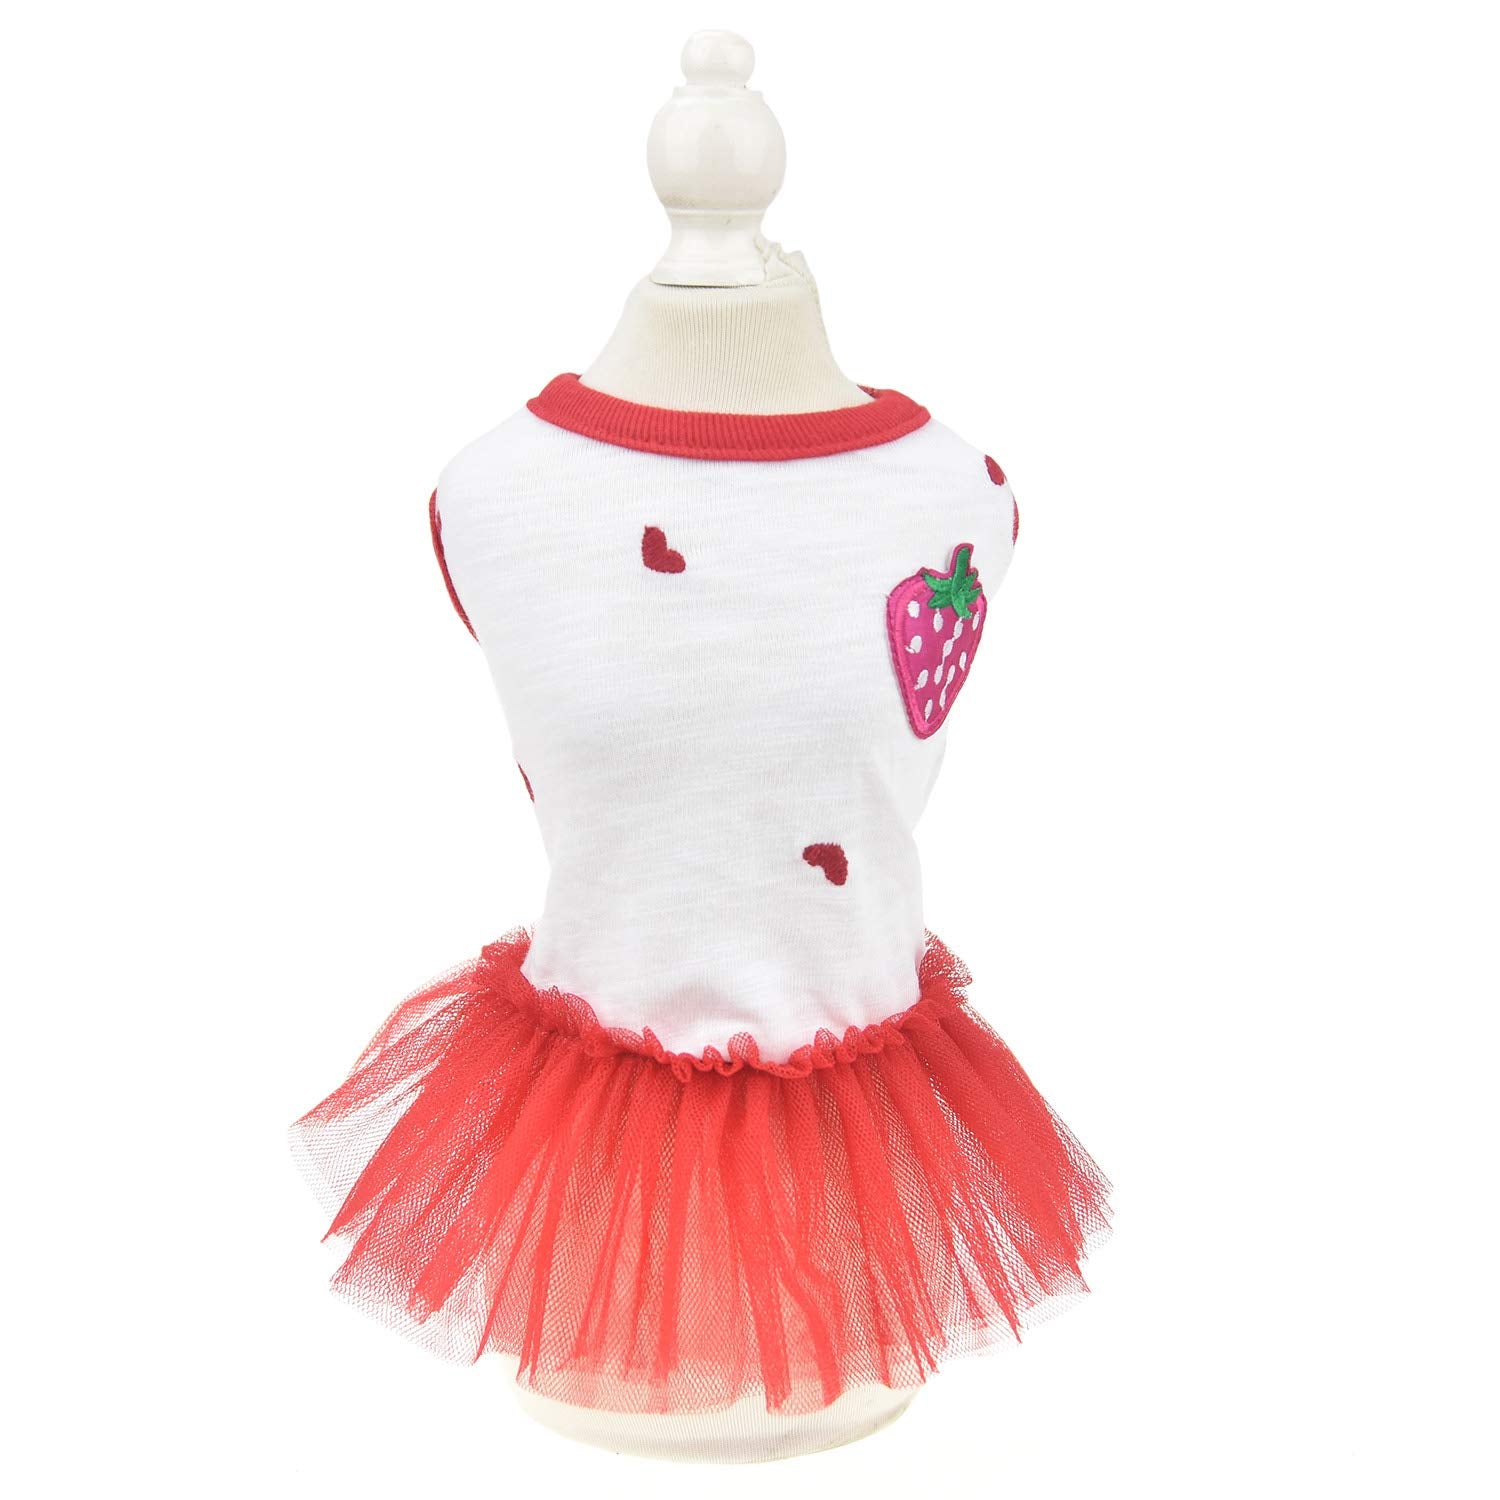 Rabbit Dress Clothes for Mini Animal Chinchilla Easter Costume